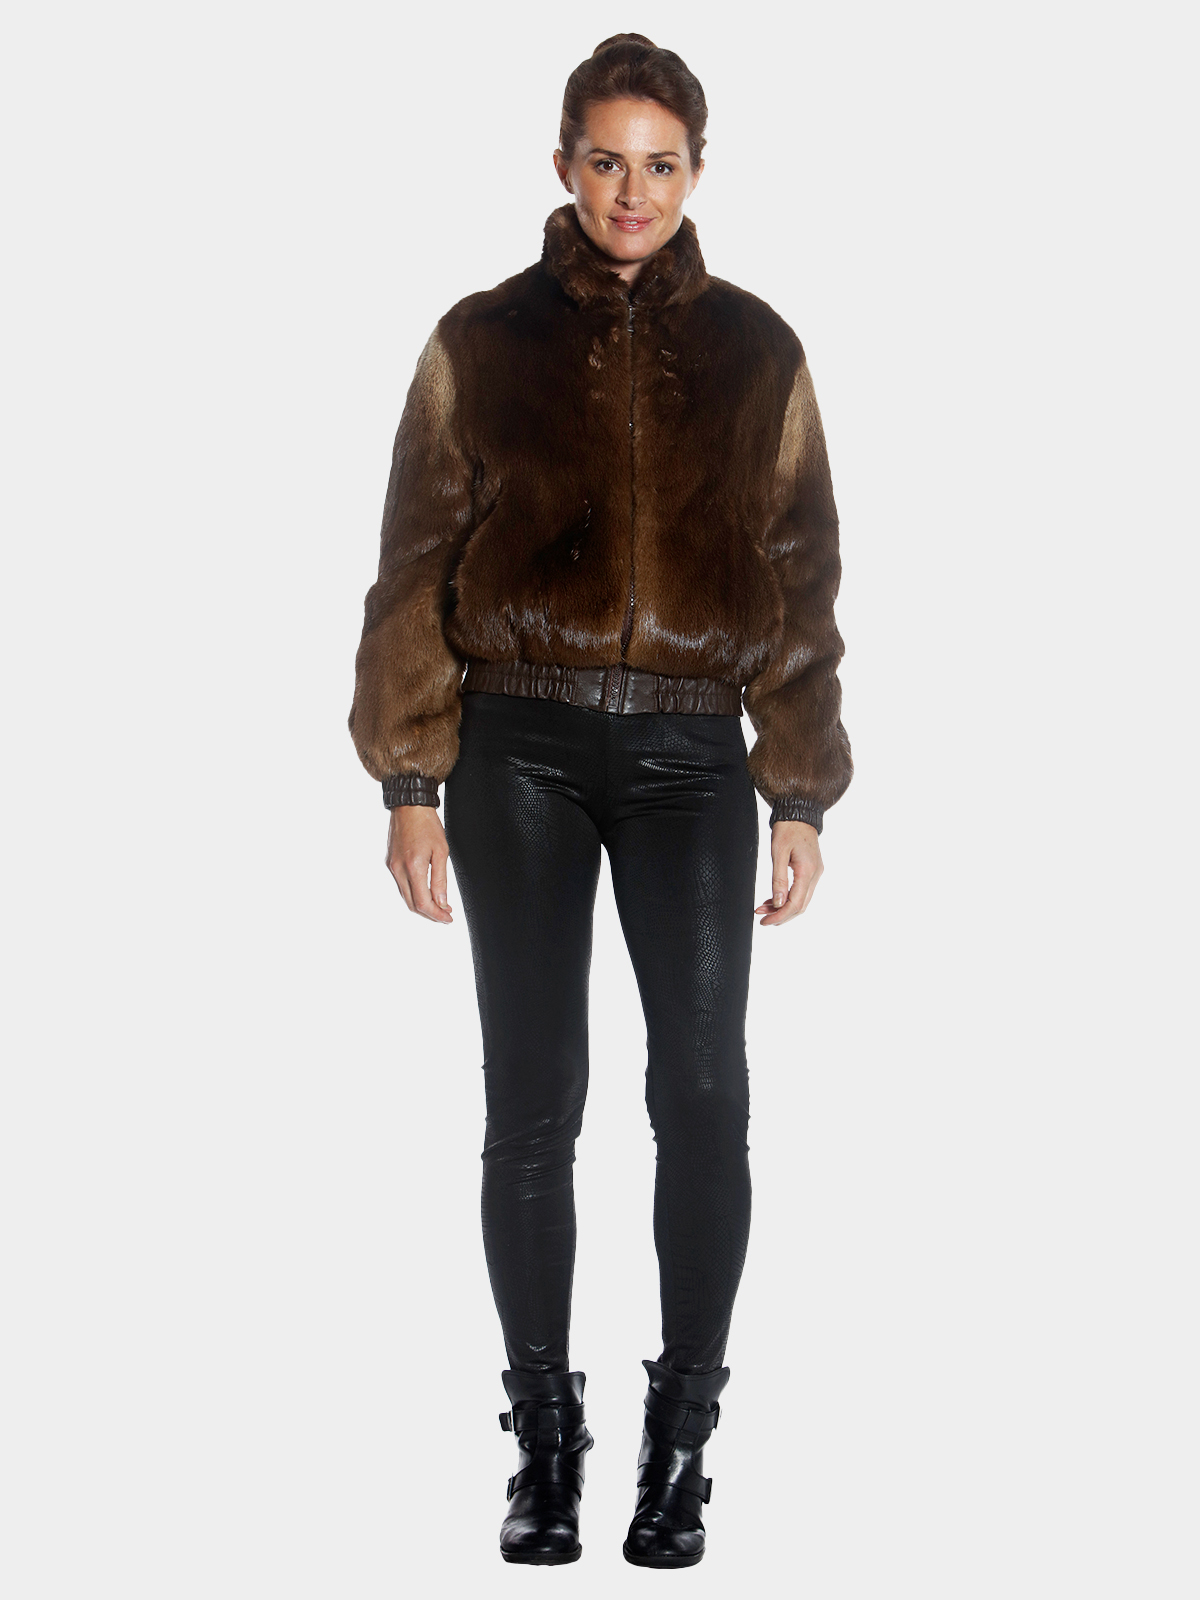 Luxury Faux Fur Coat Women Lapel Mid Length Cardigan Open Front Winter  Jacket Fashion Warm Outerwear Overcoat Black at Amazon Women's Coats Shop